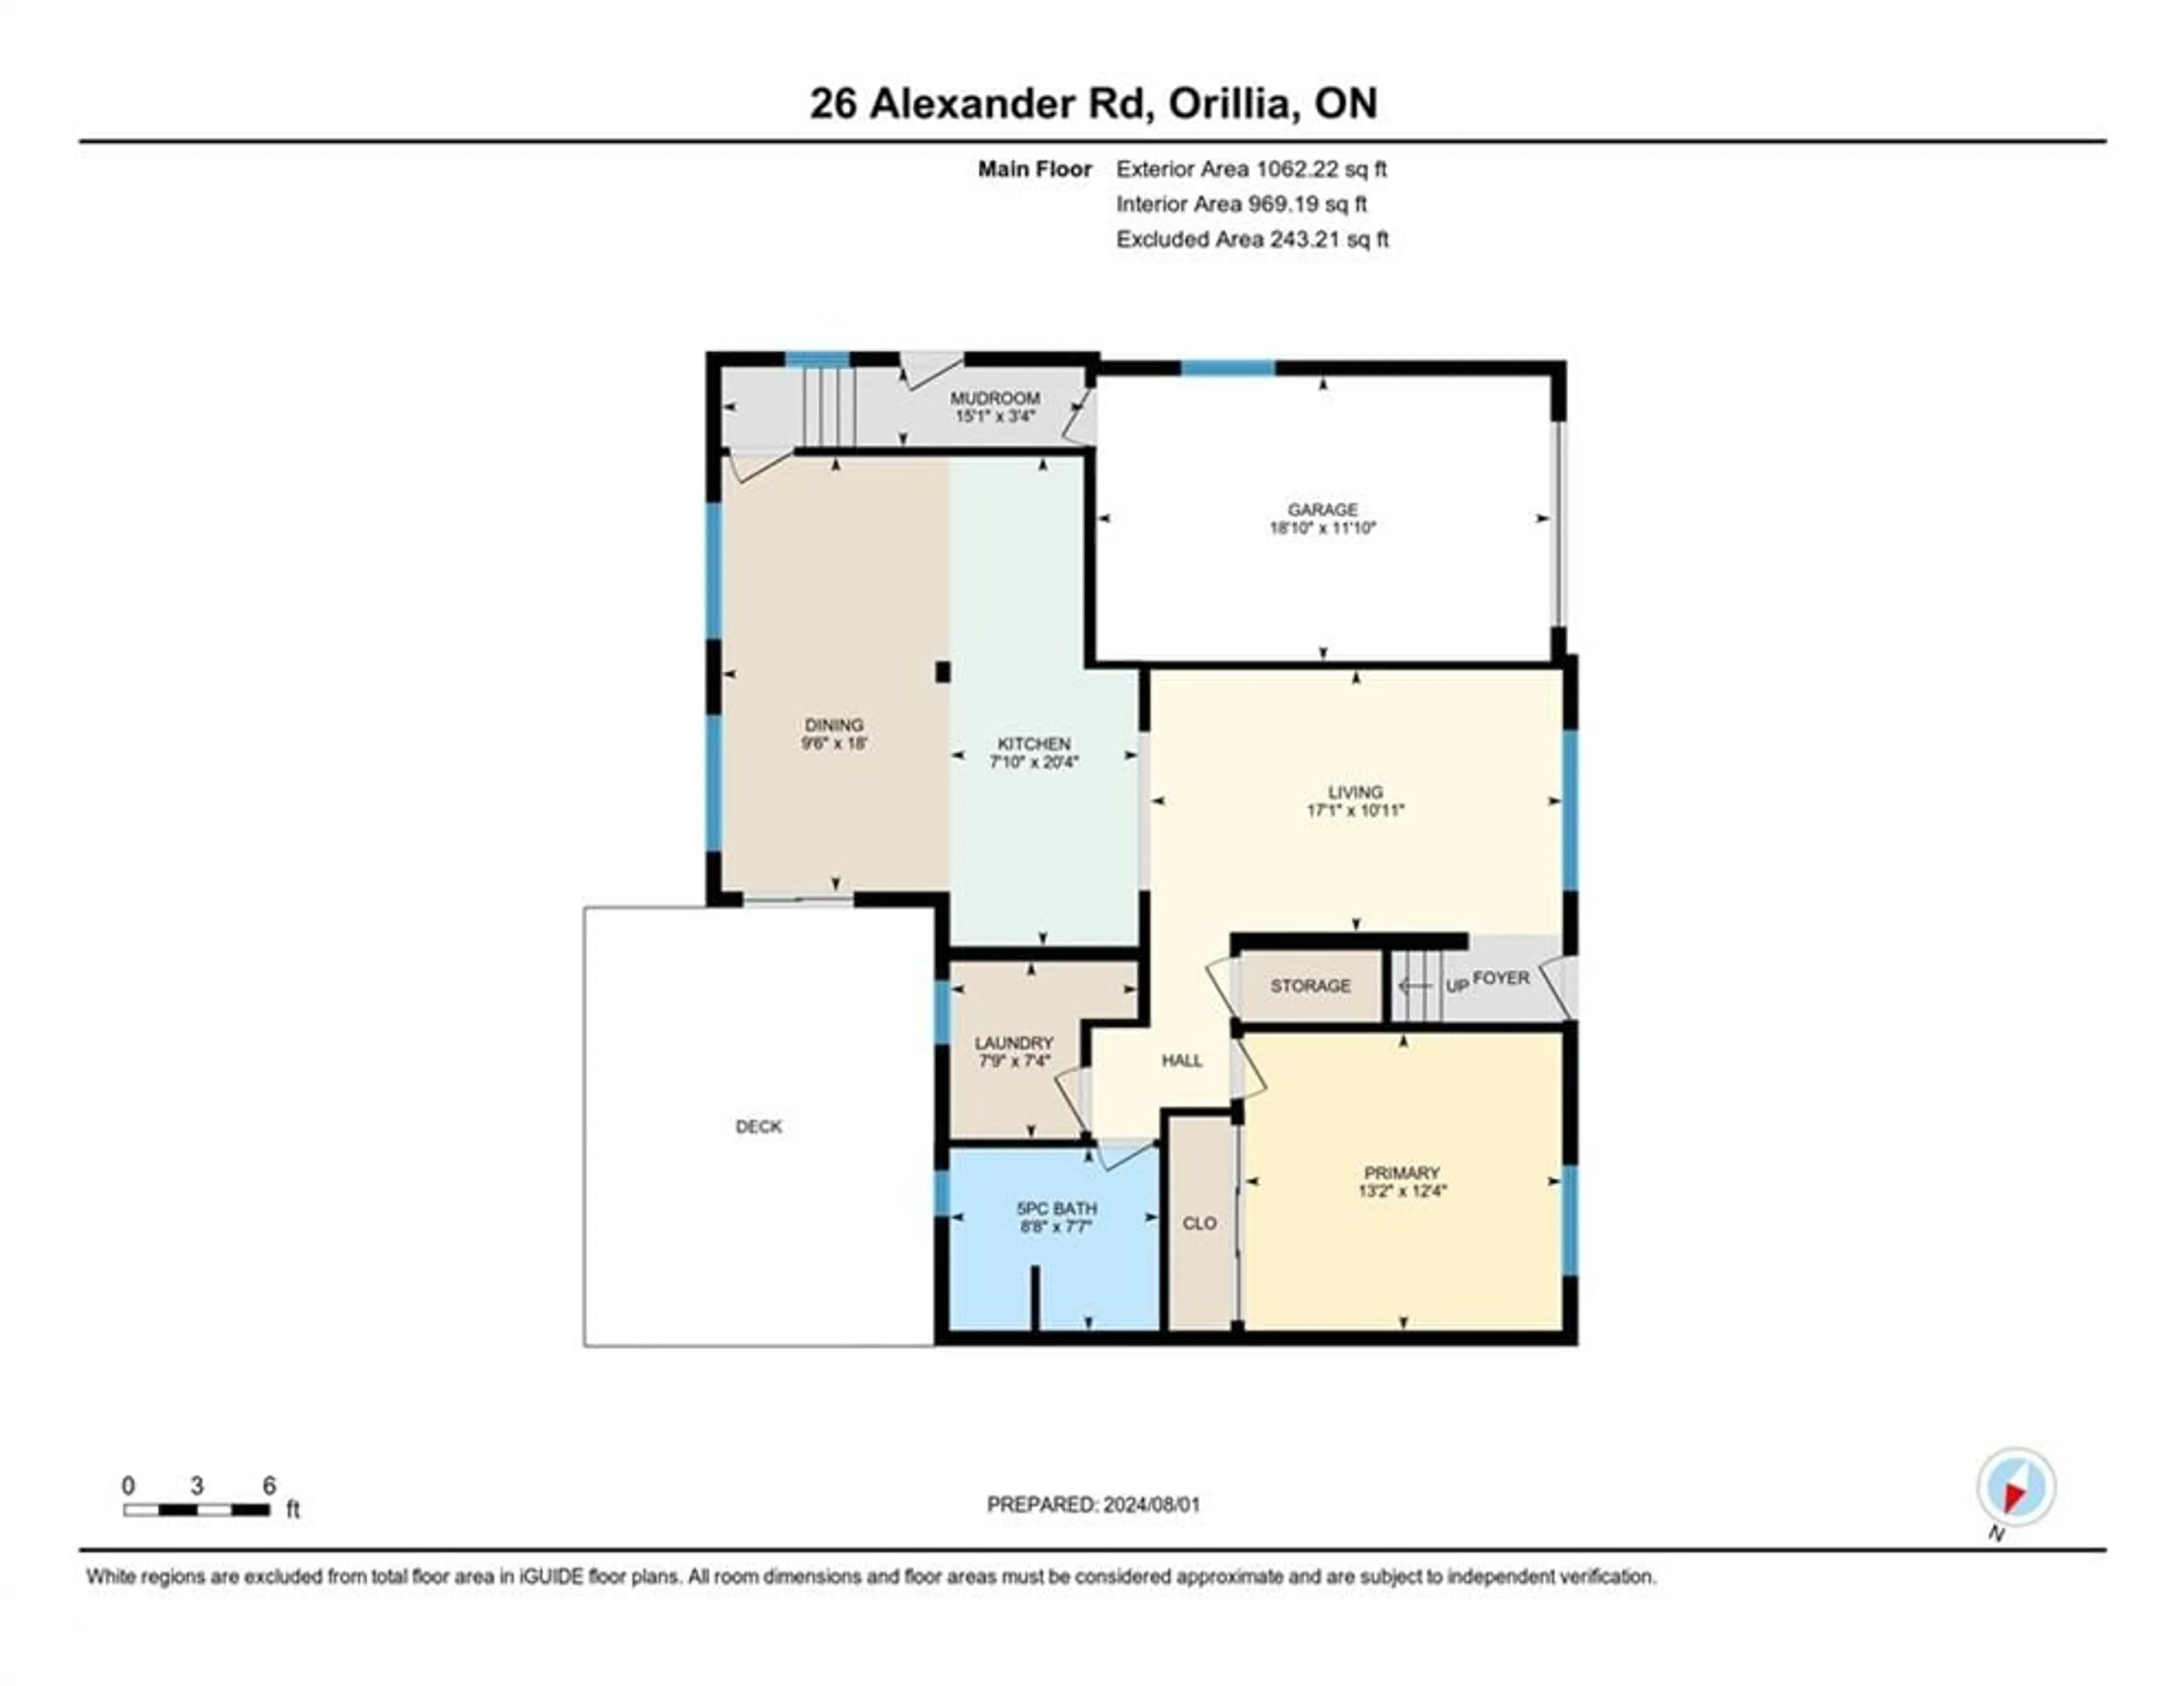 Floor plan for 26 Alexander Rd, Orillia Ontario L3V 5L8